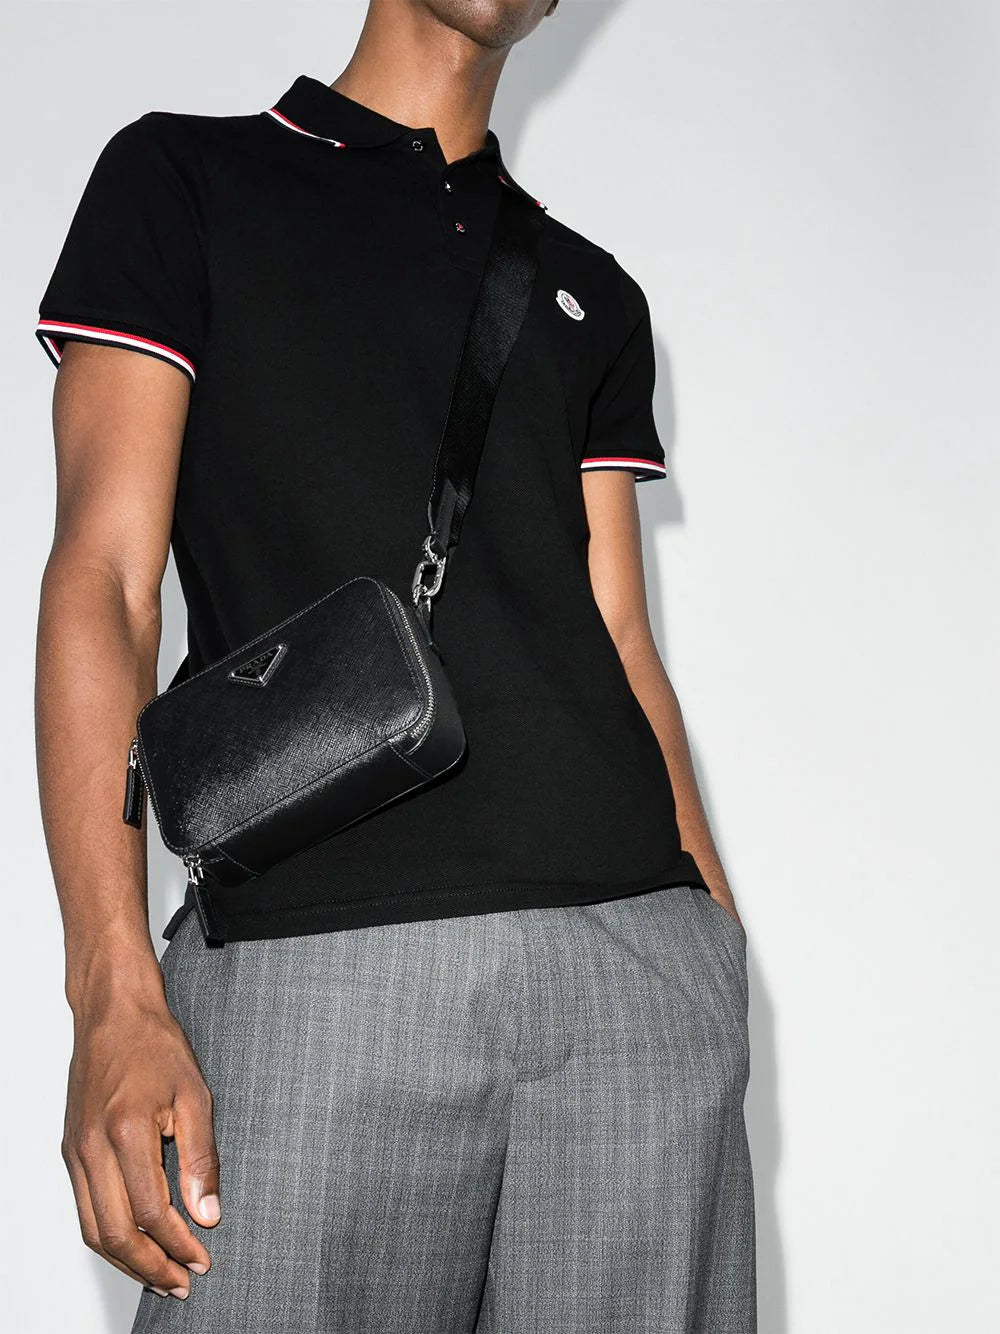 Prada Brique Saffiano leather bag for Men - Black in Bahrain